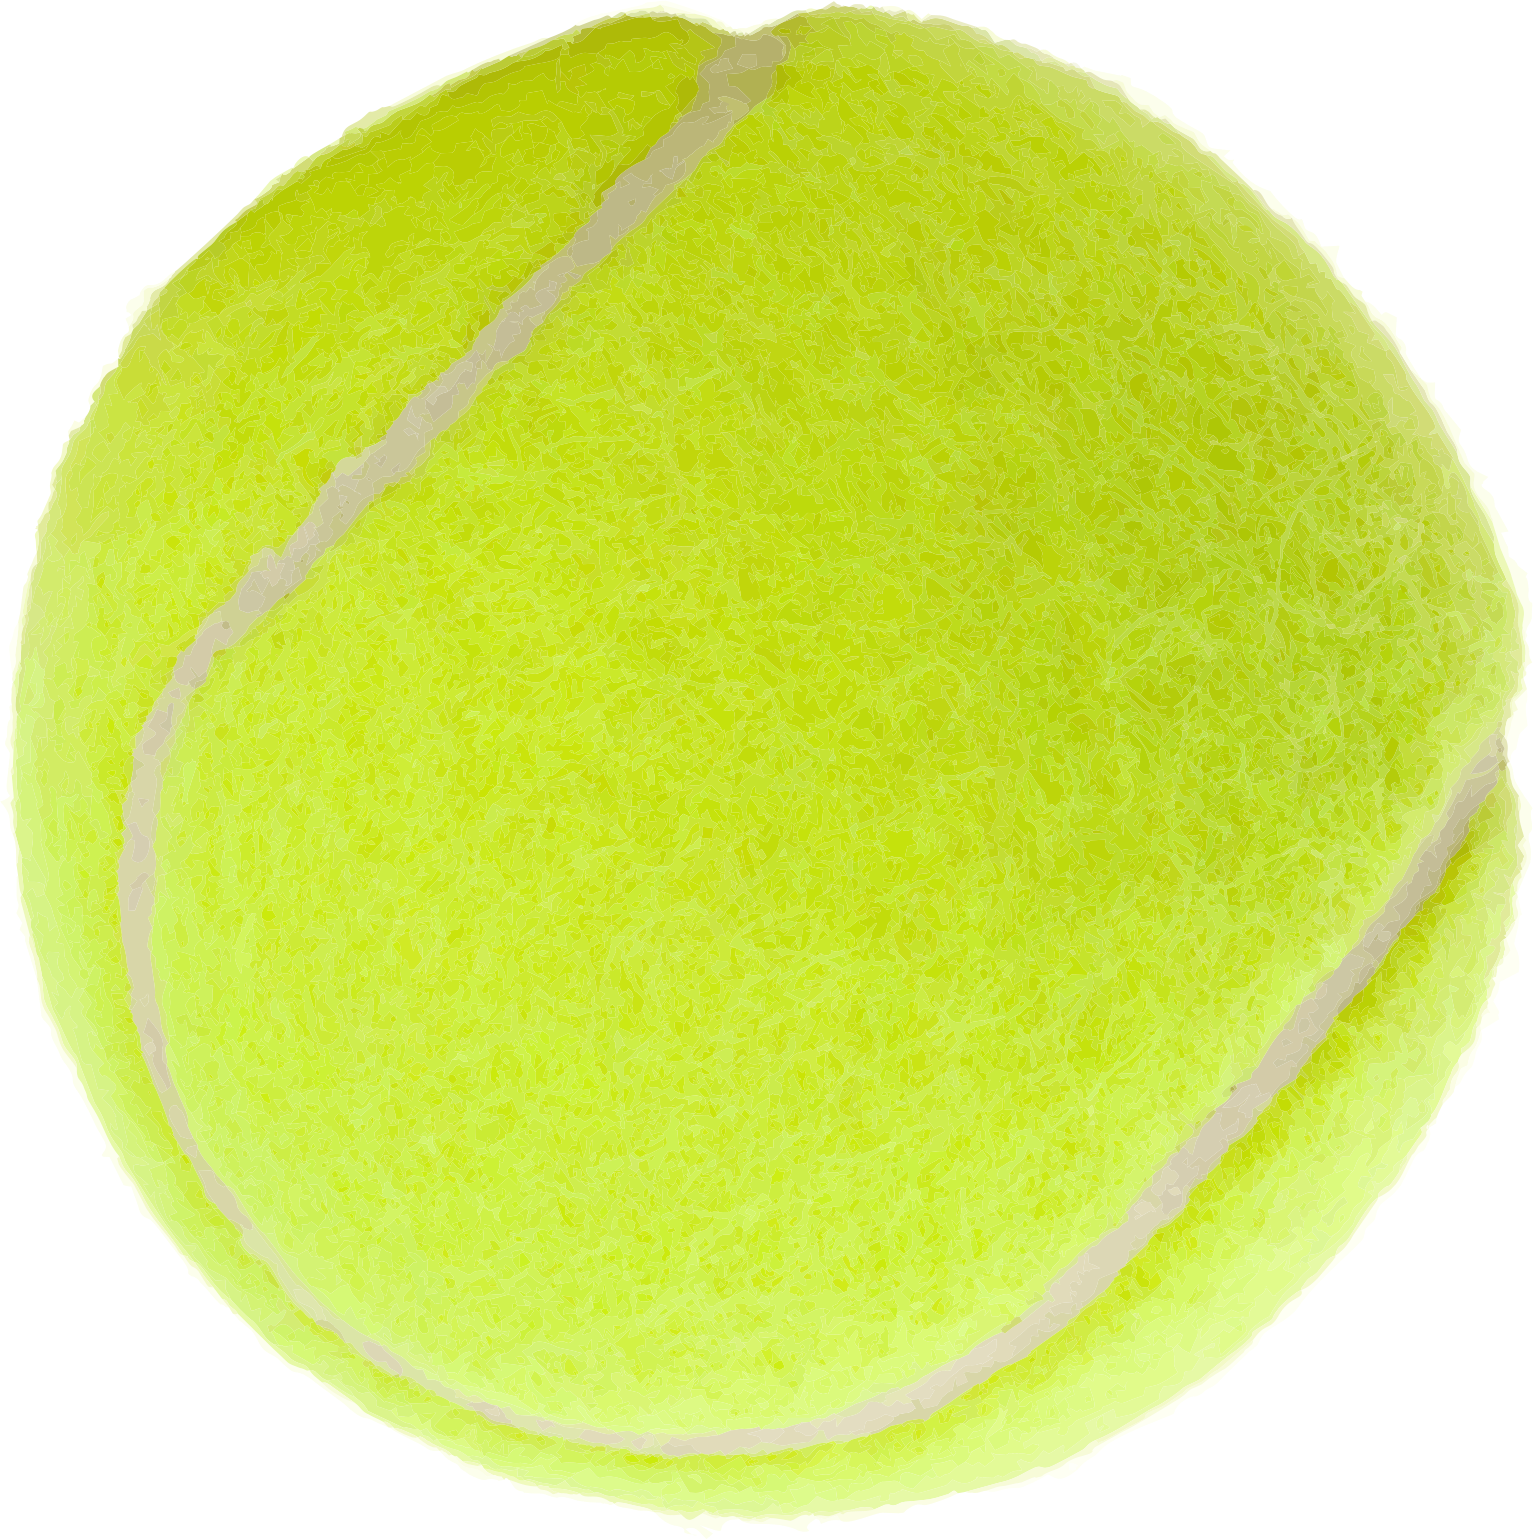 Tennis Ball Free To Use Cliparts - Pelota De Tenis .png (1533x1540)